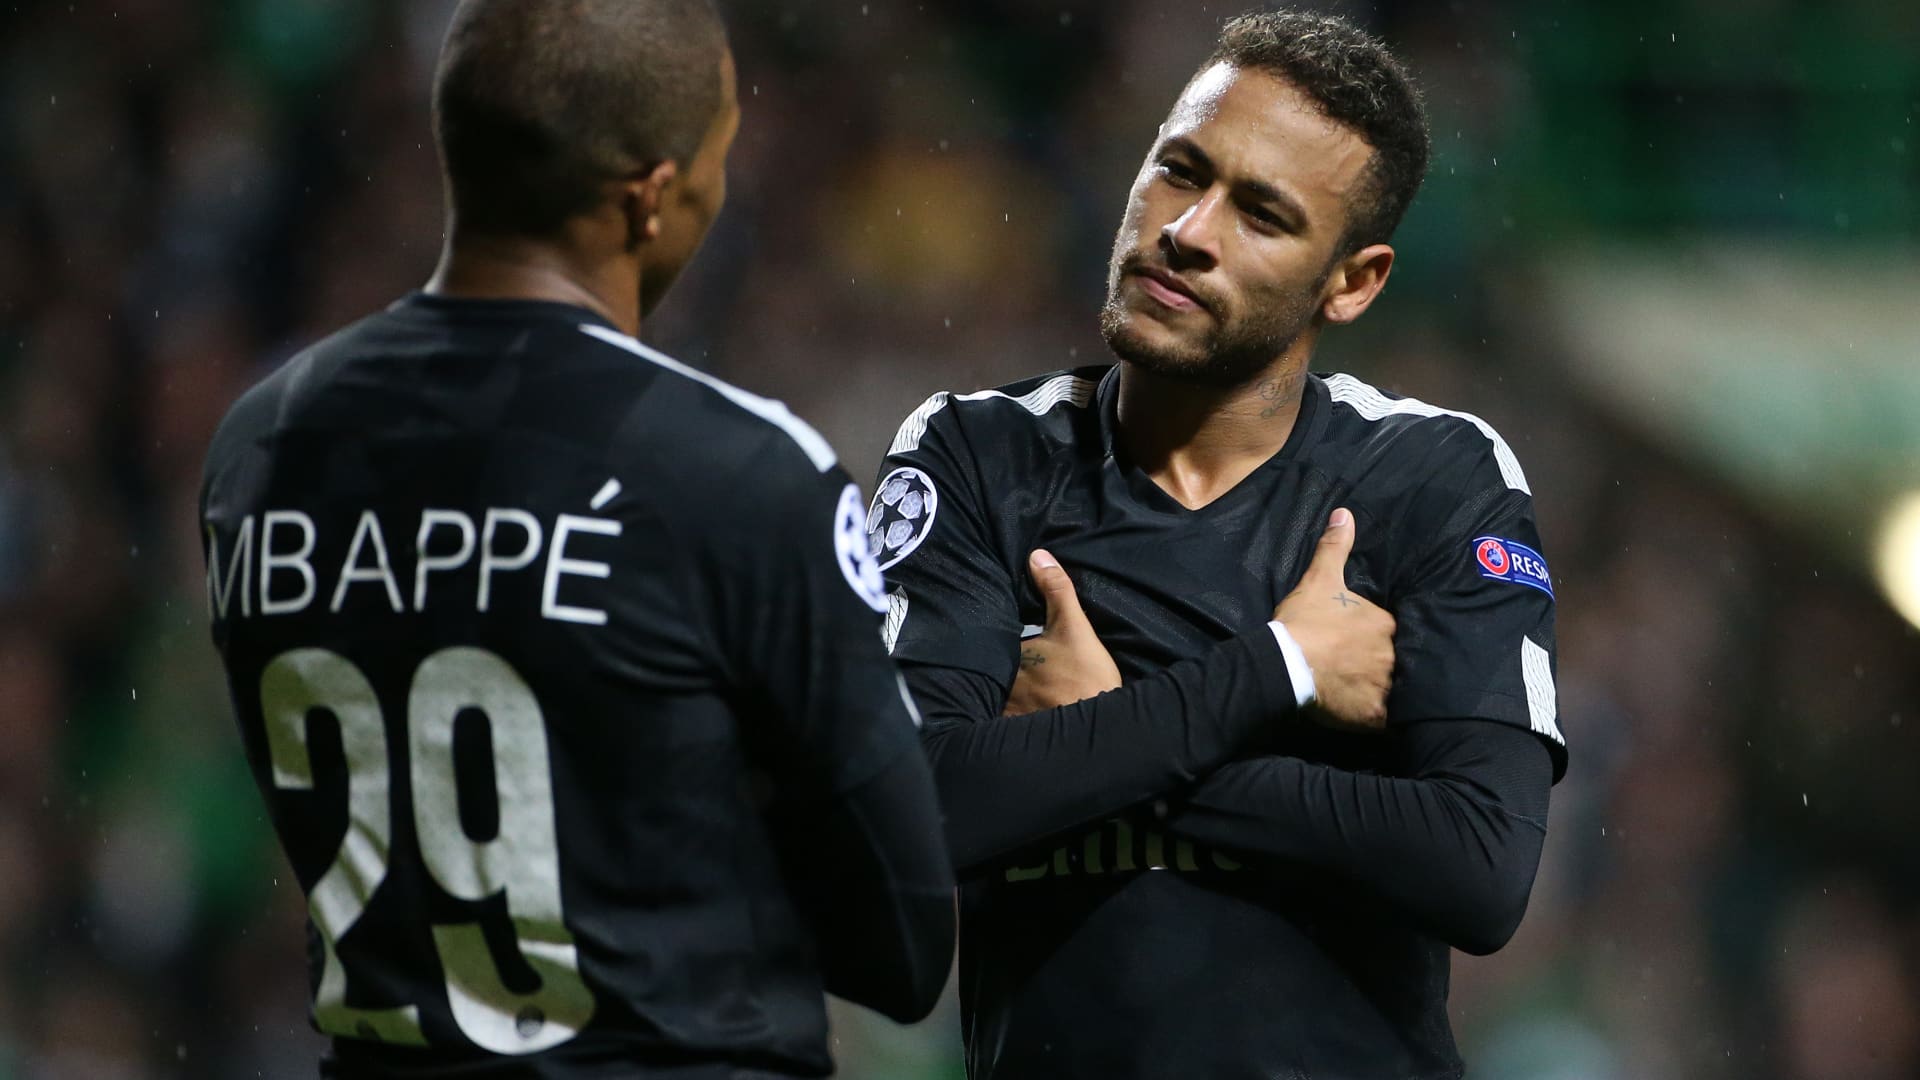 Saudi soccer team Al-Hilal lures Brazilian star Neymar